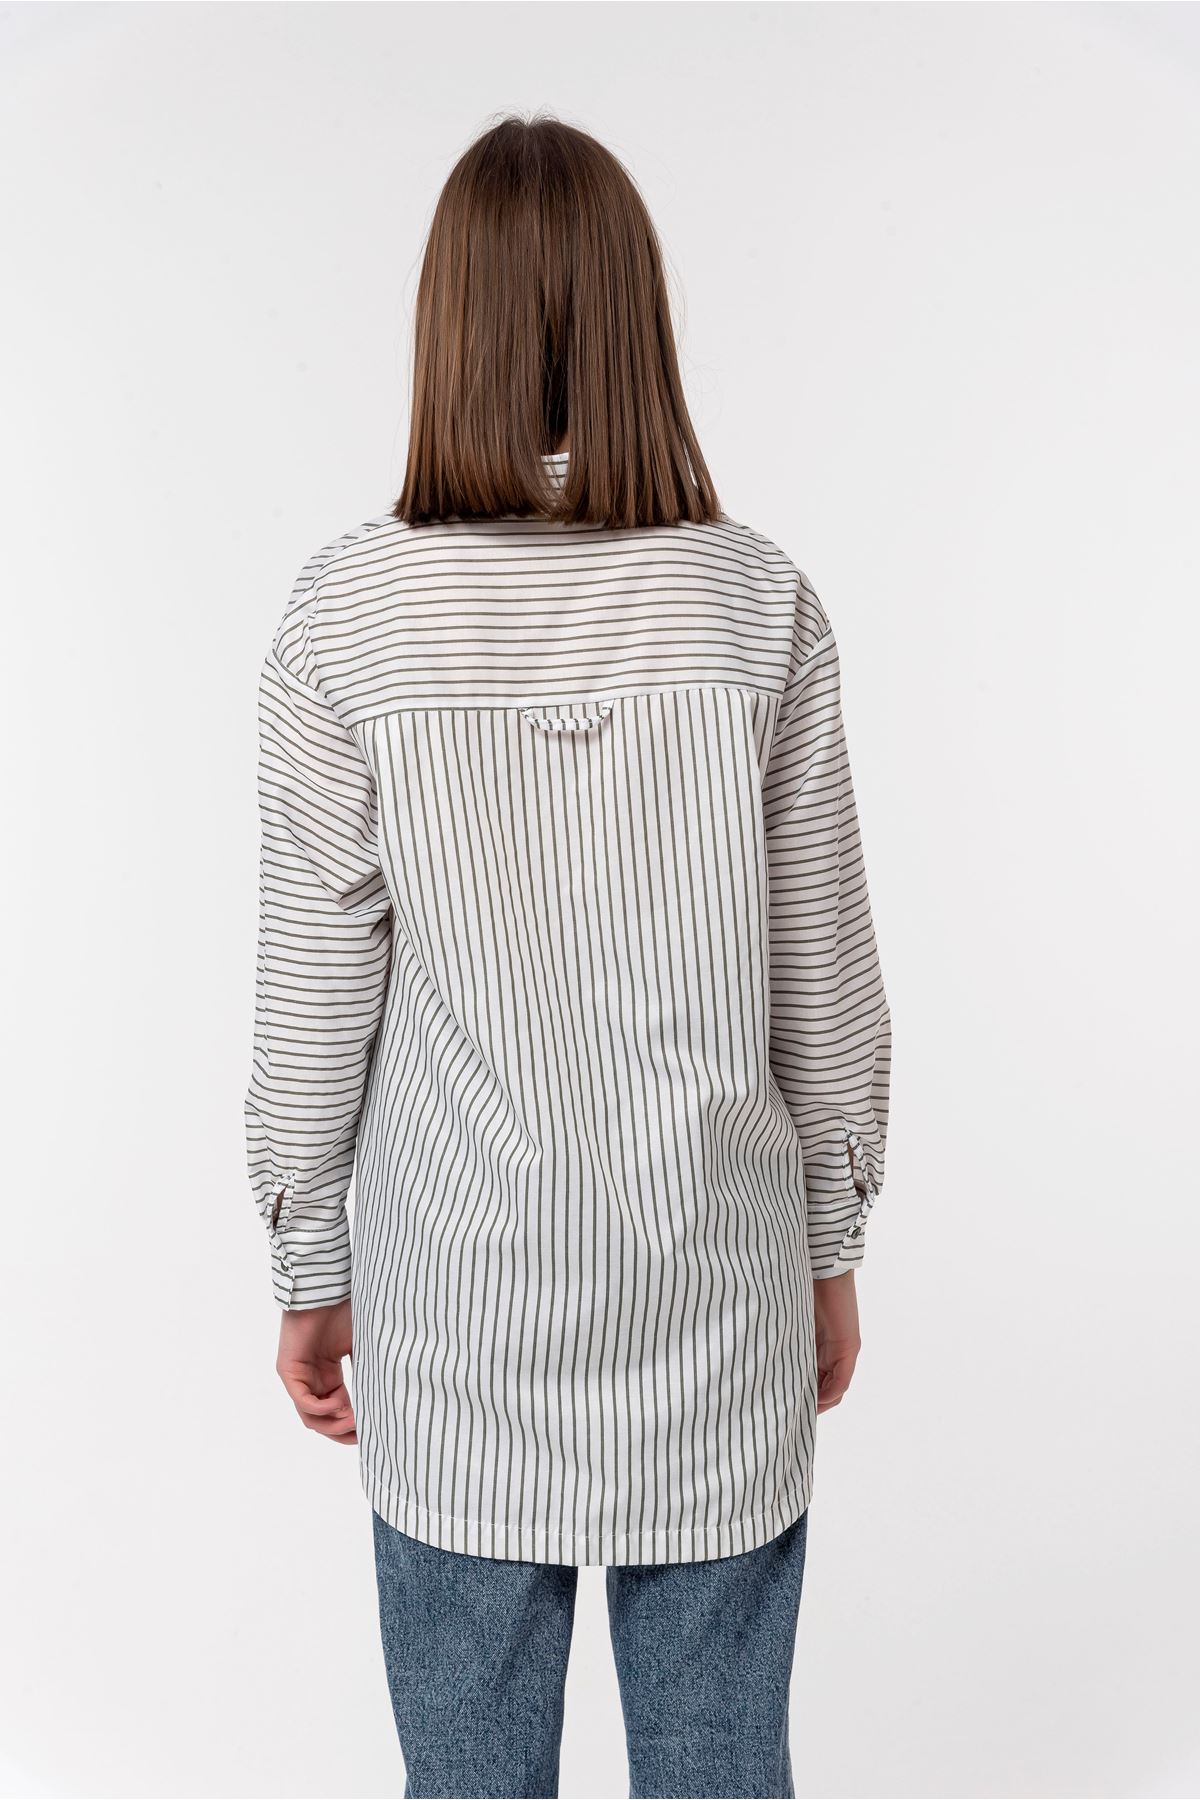 Satin Fabric Long Sleeve Oversize Striped Women'S Shirt - Khaki 